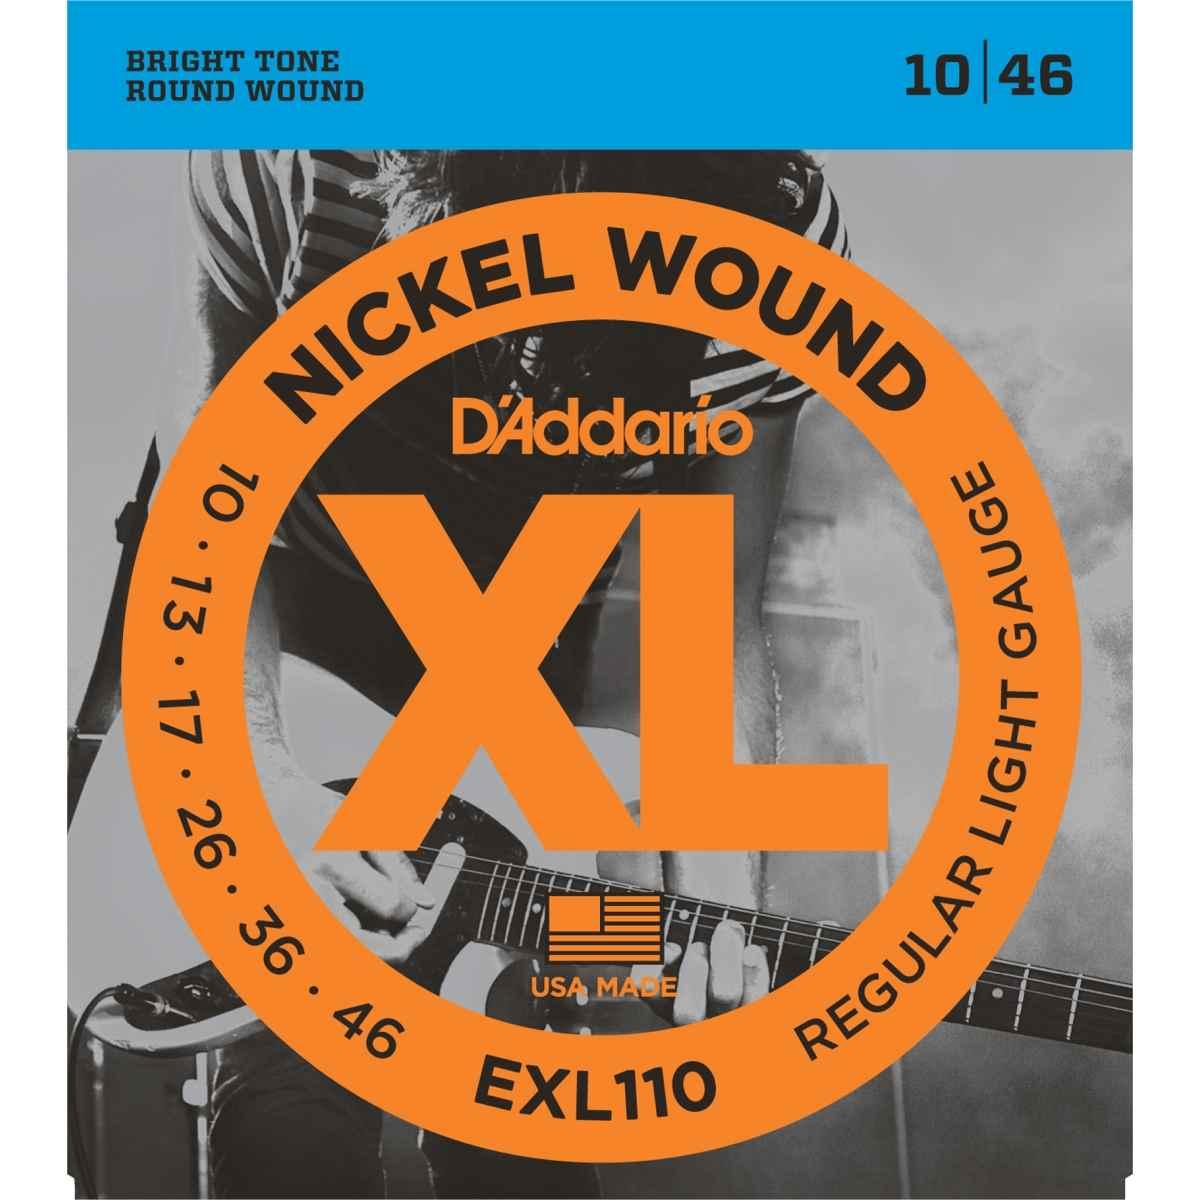 D'addario exl110 nickel wound electric guitar strings, regular light, 10-46